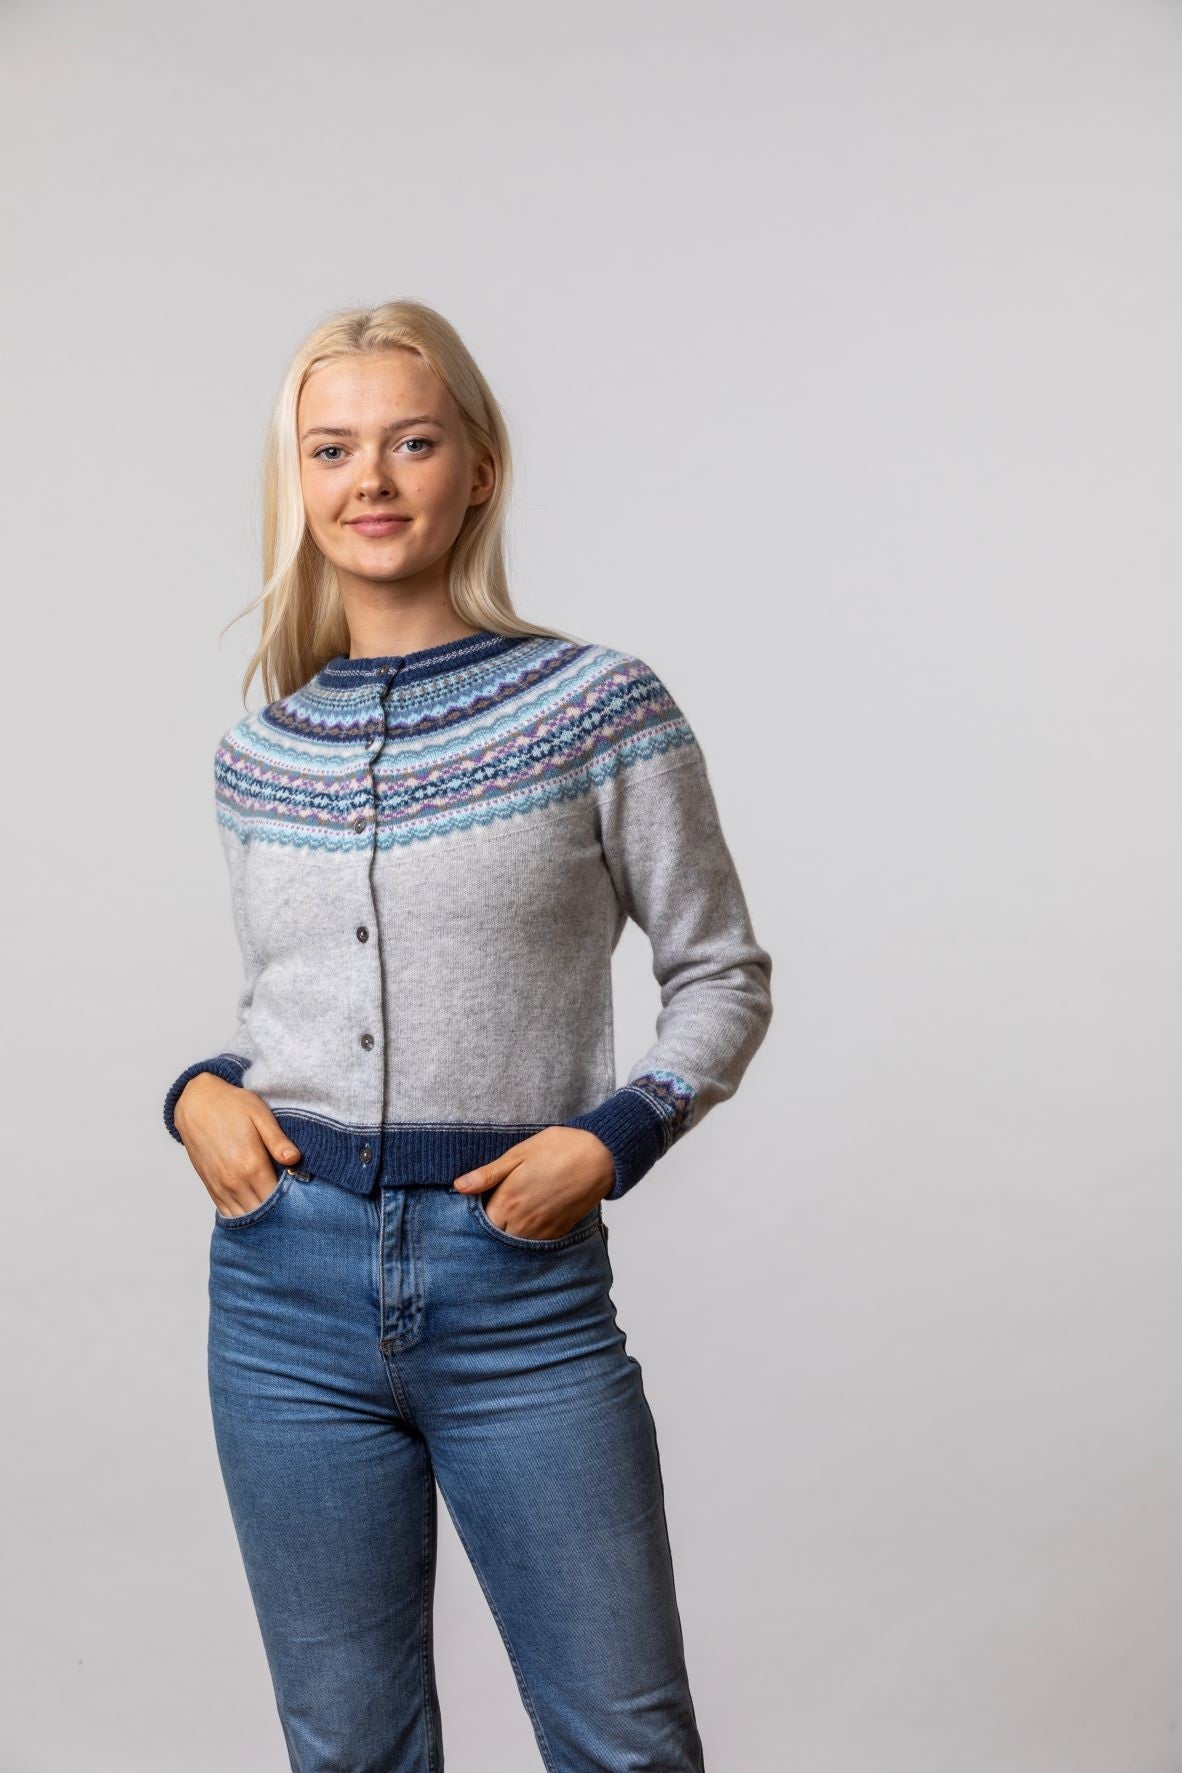 NEW 'Arctic' Alpine Short Cardigan 100% Merino Lambswool designed by ERIBÉ Knitwear